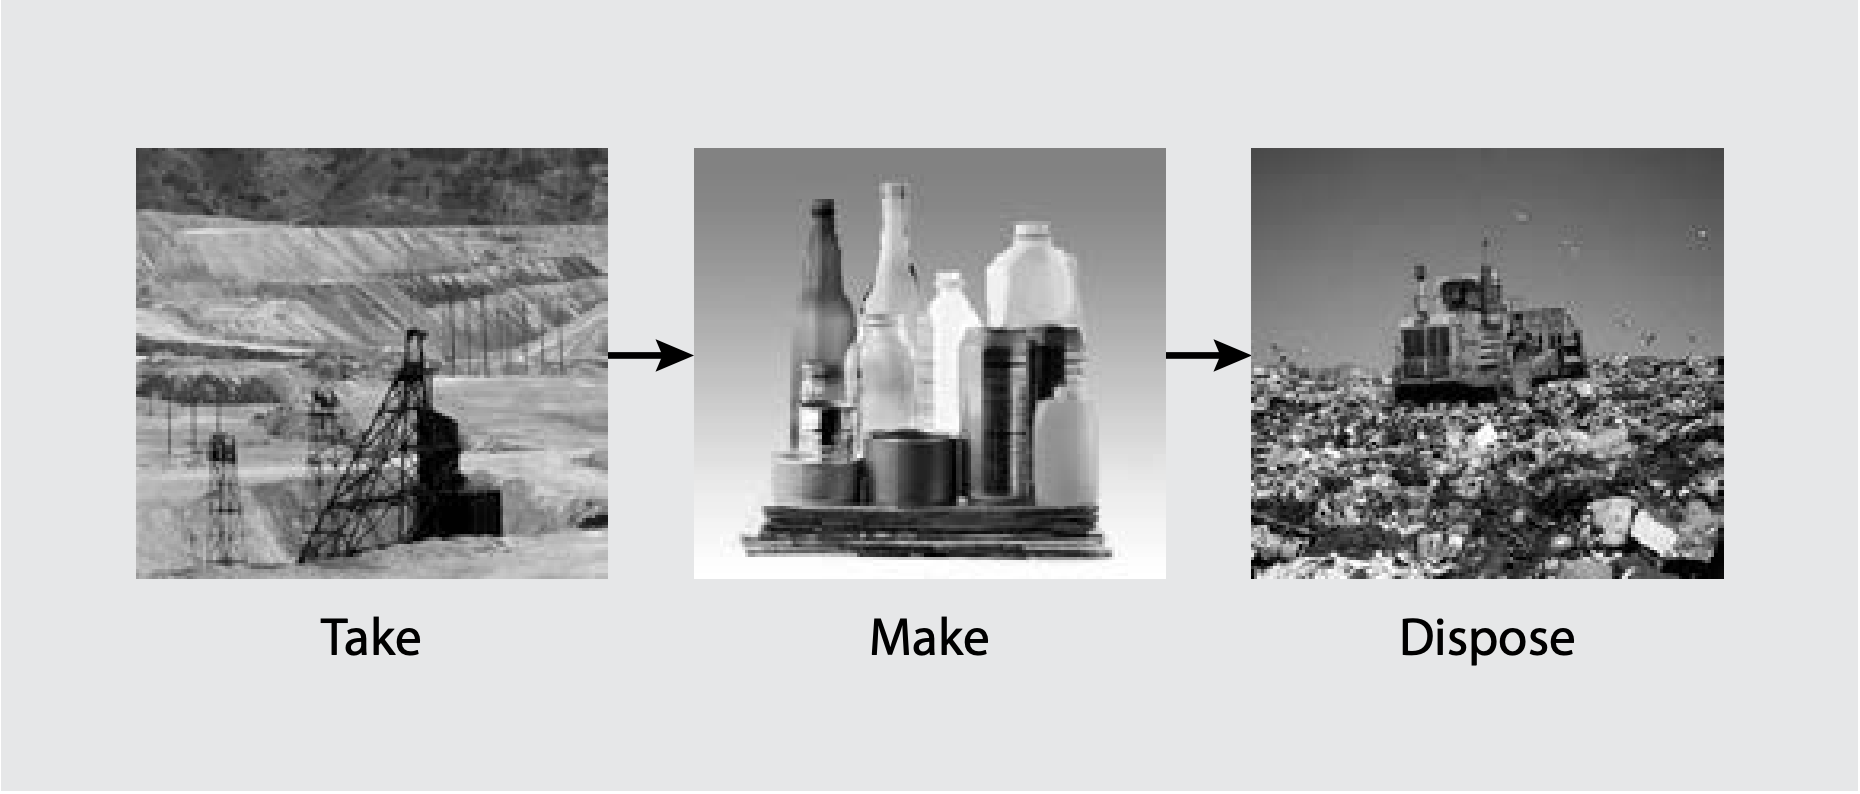 Take, make, waste linear model